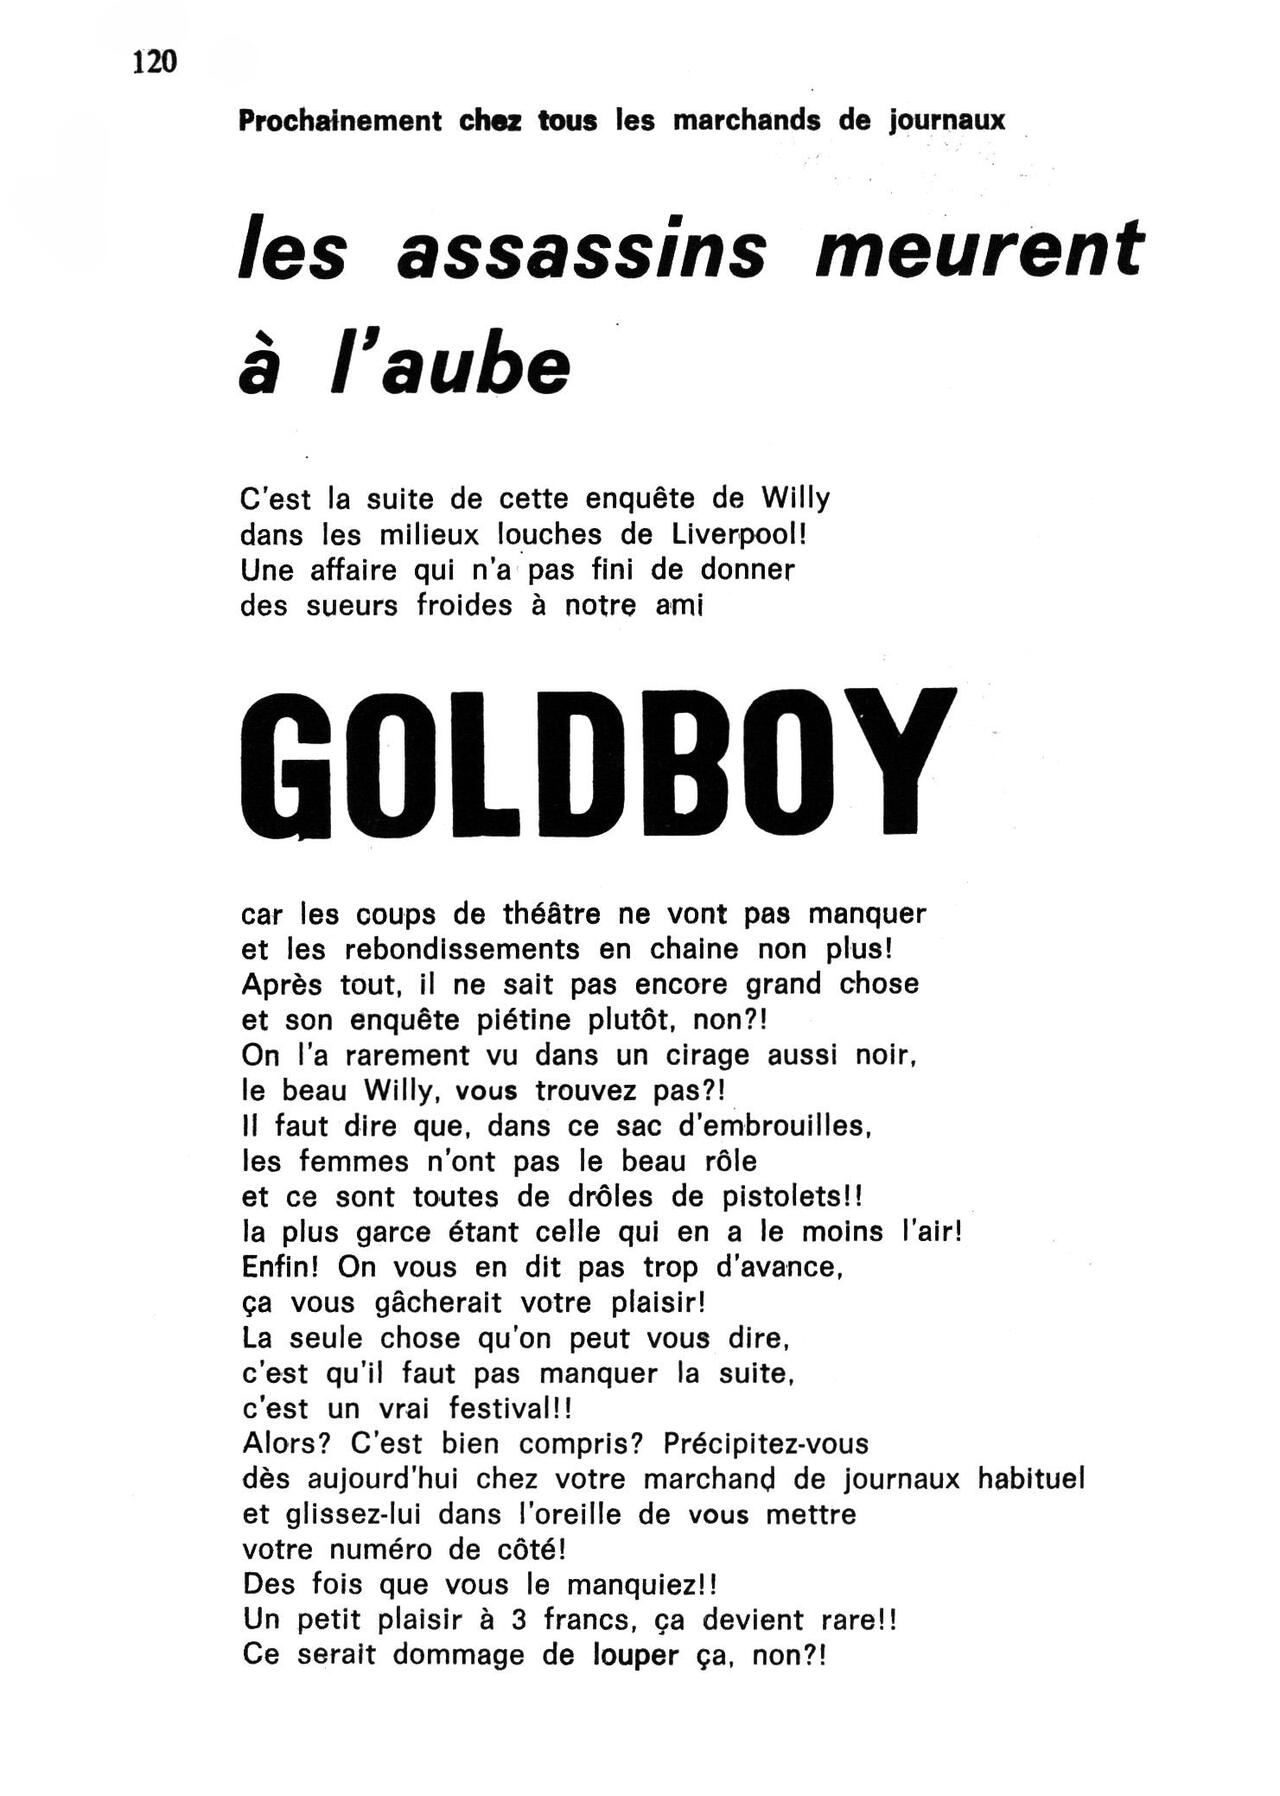 Goldboy 023 - Killer numero d'image 119